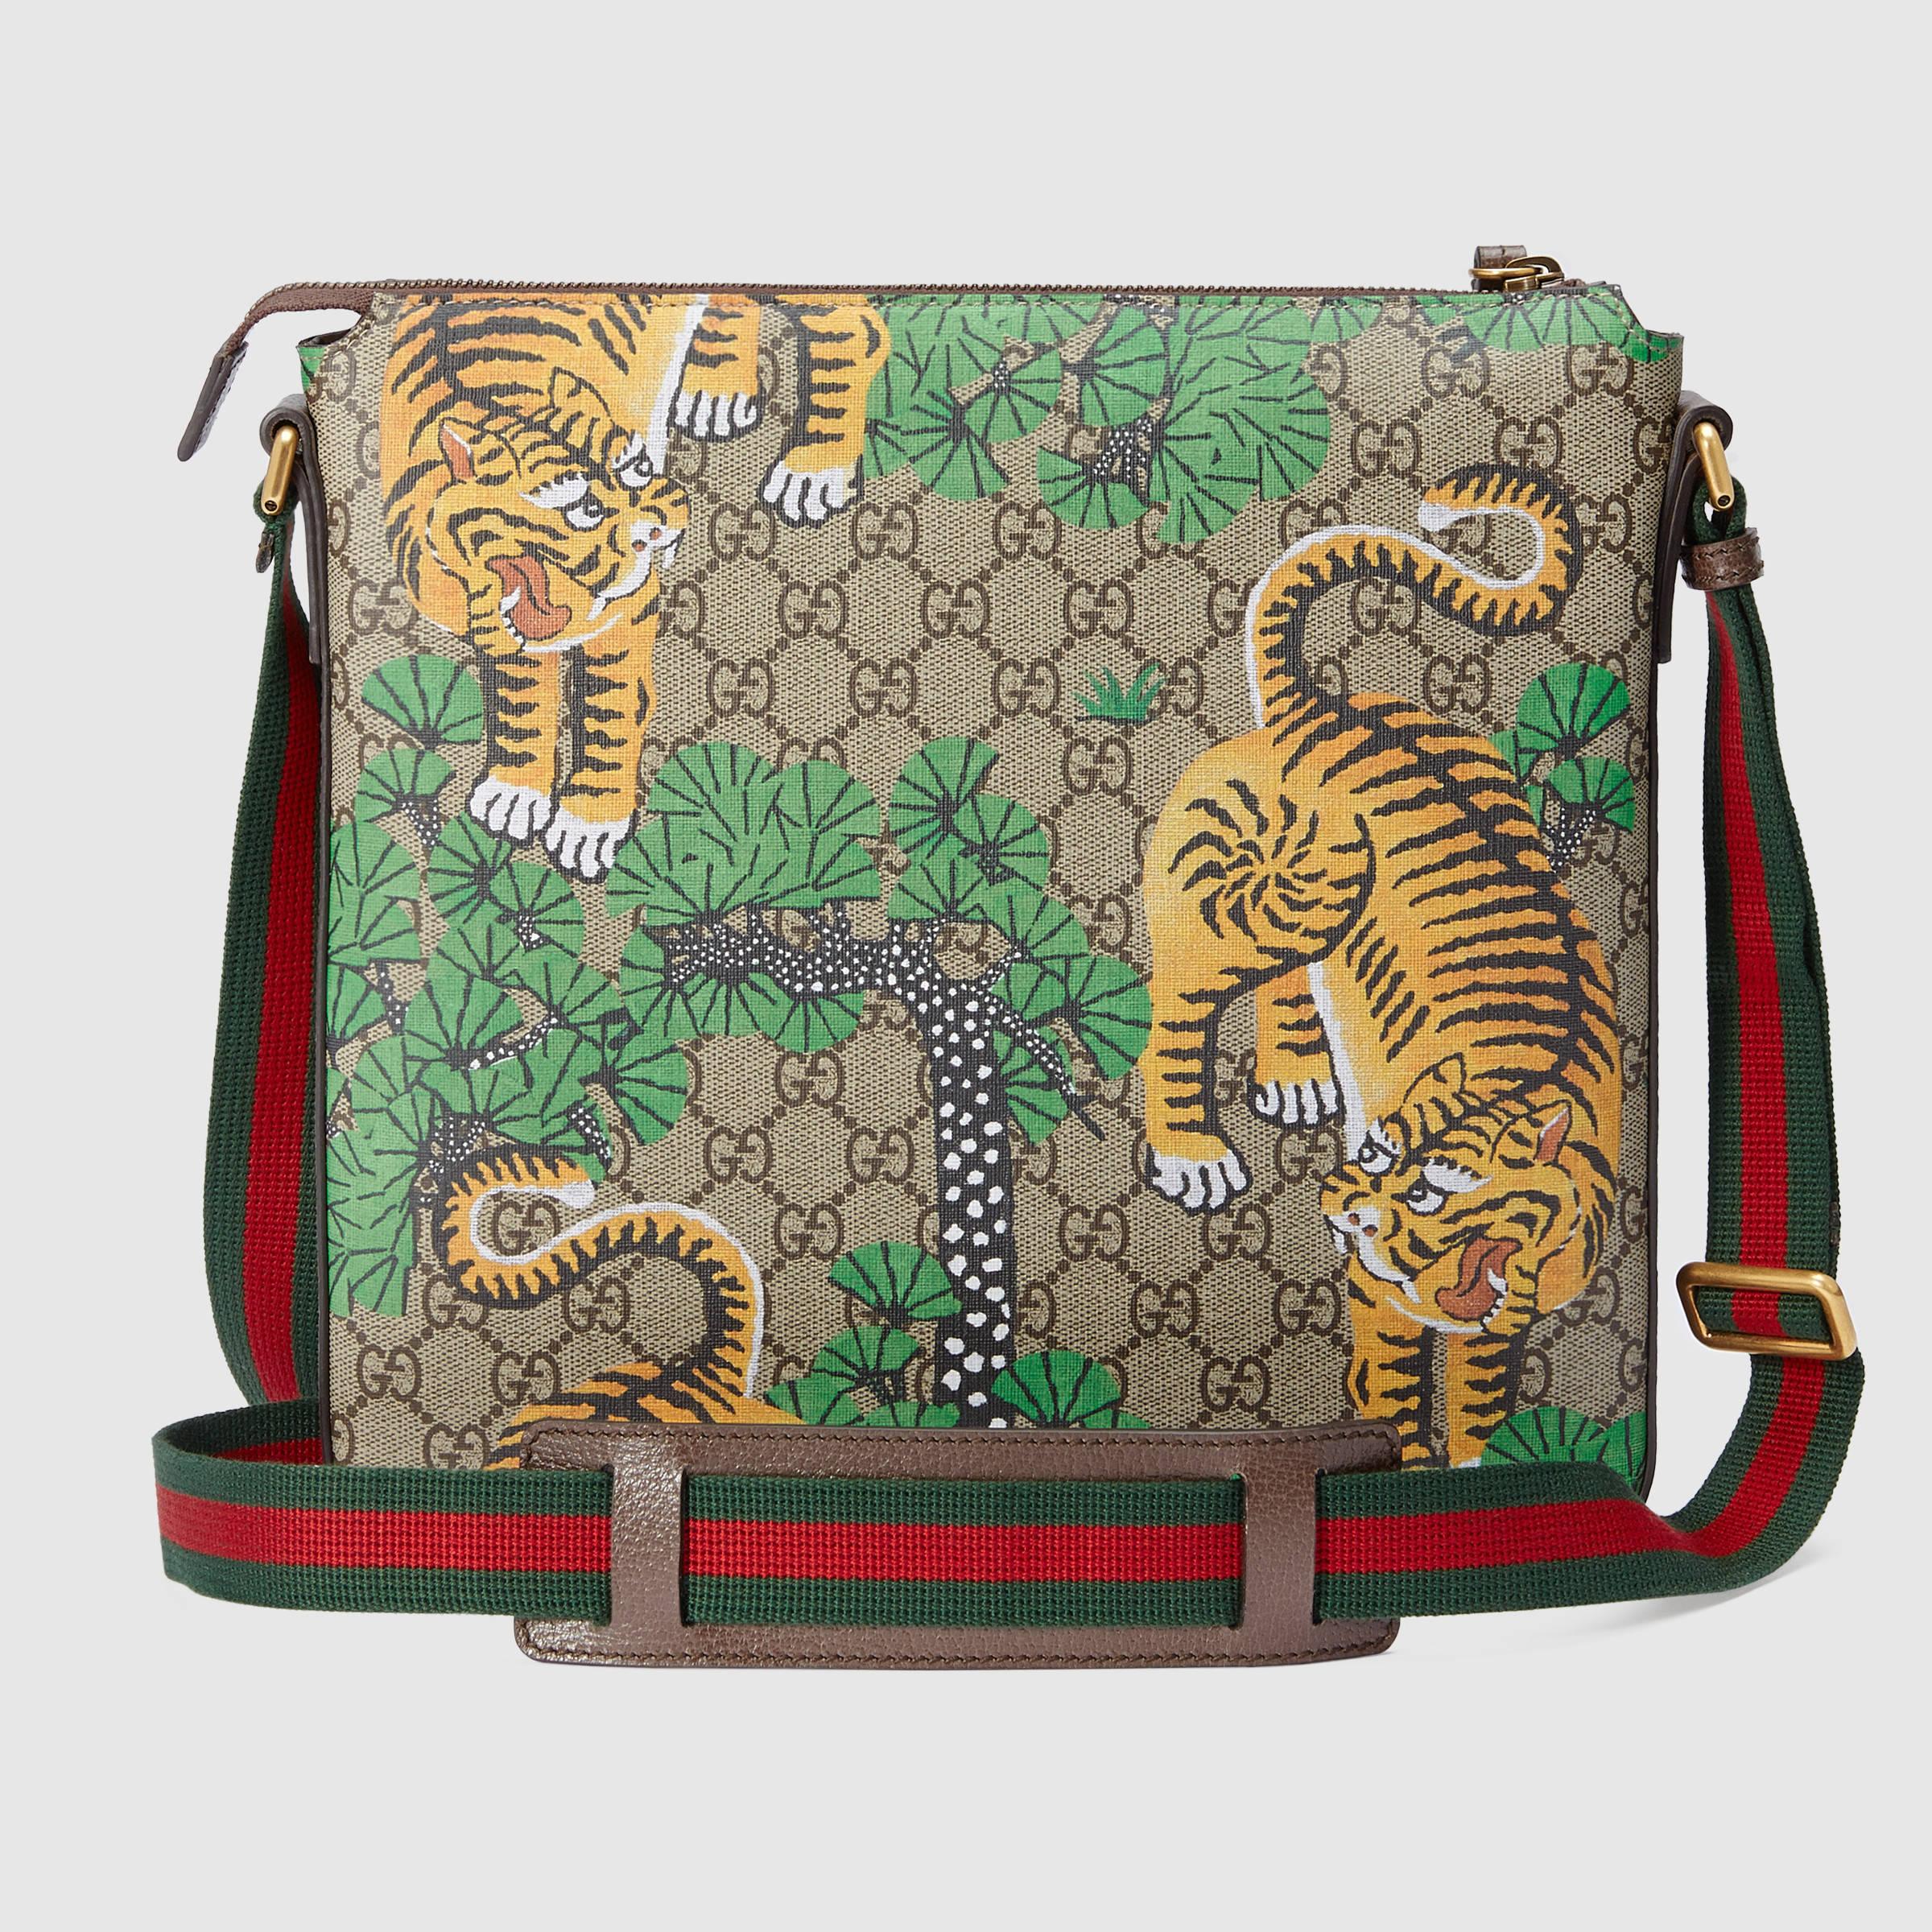 Gucci Bag Tiger Print Top Sellers - anuariocidob.org 1687207168